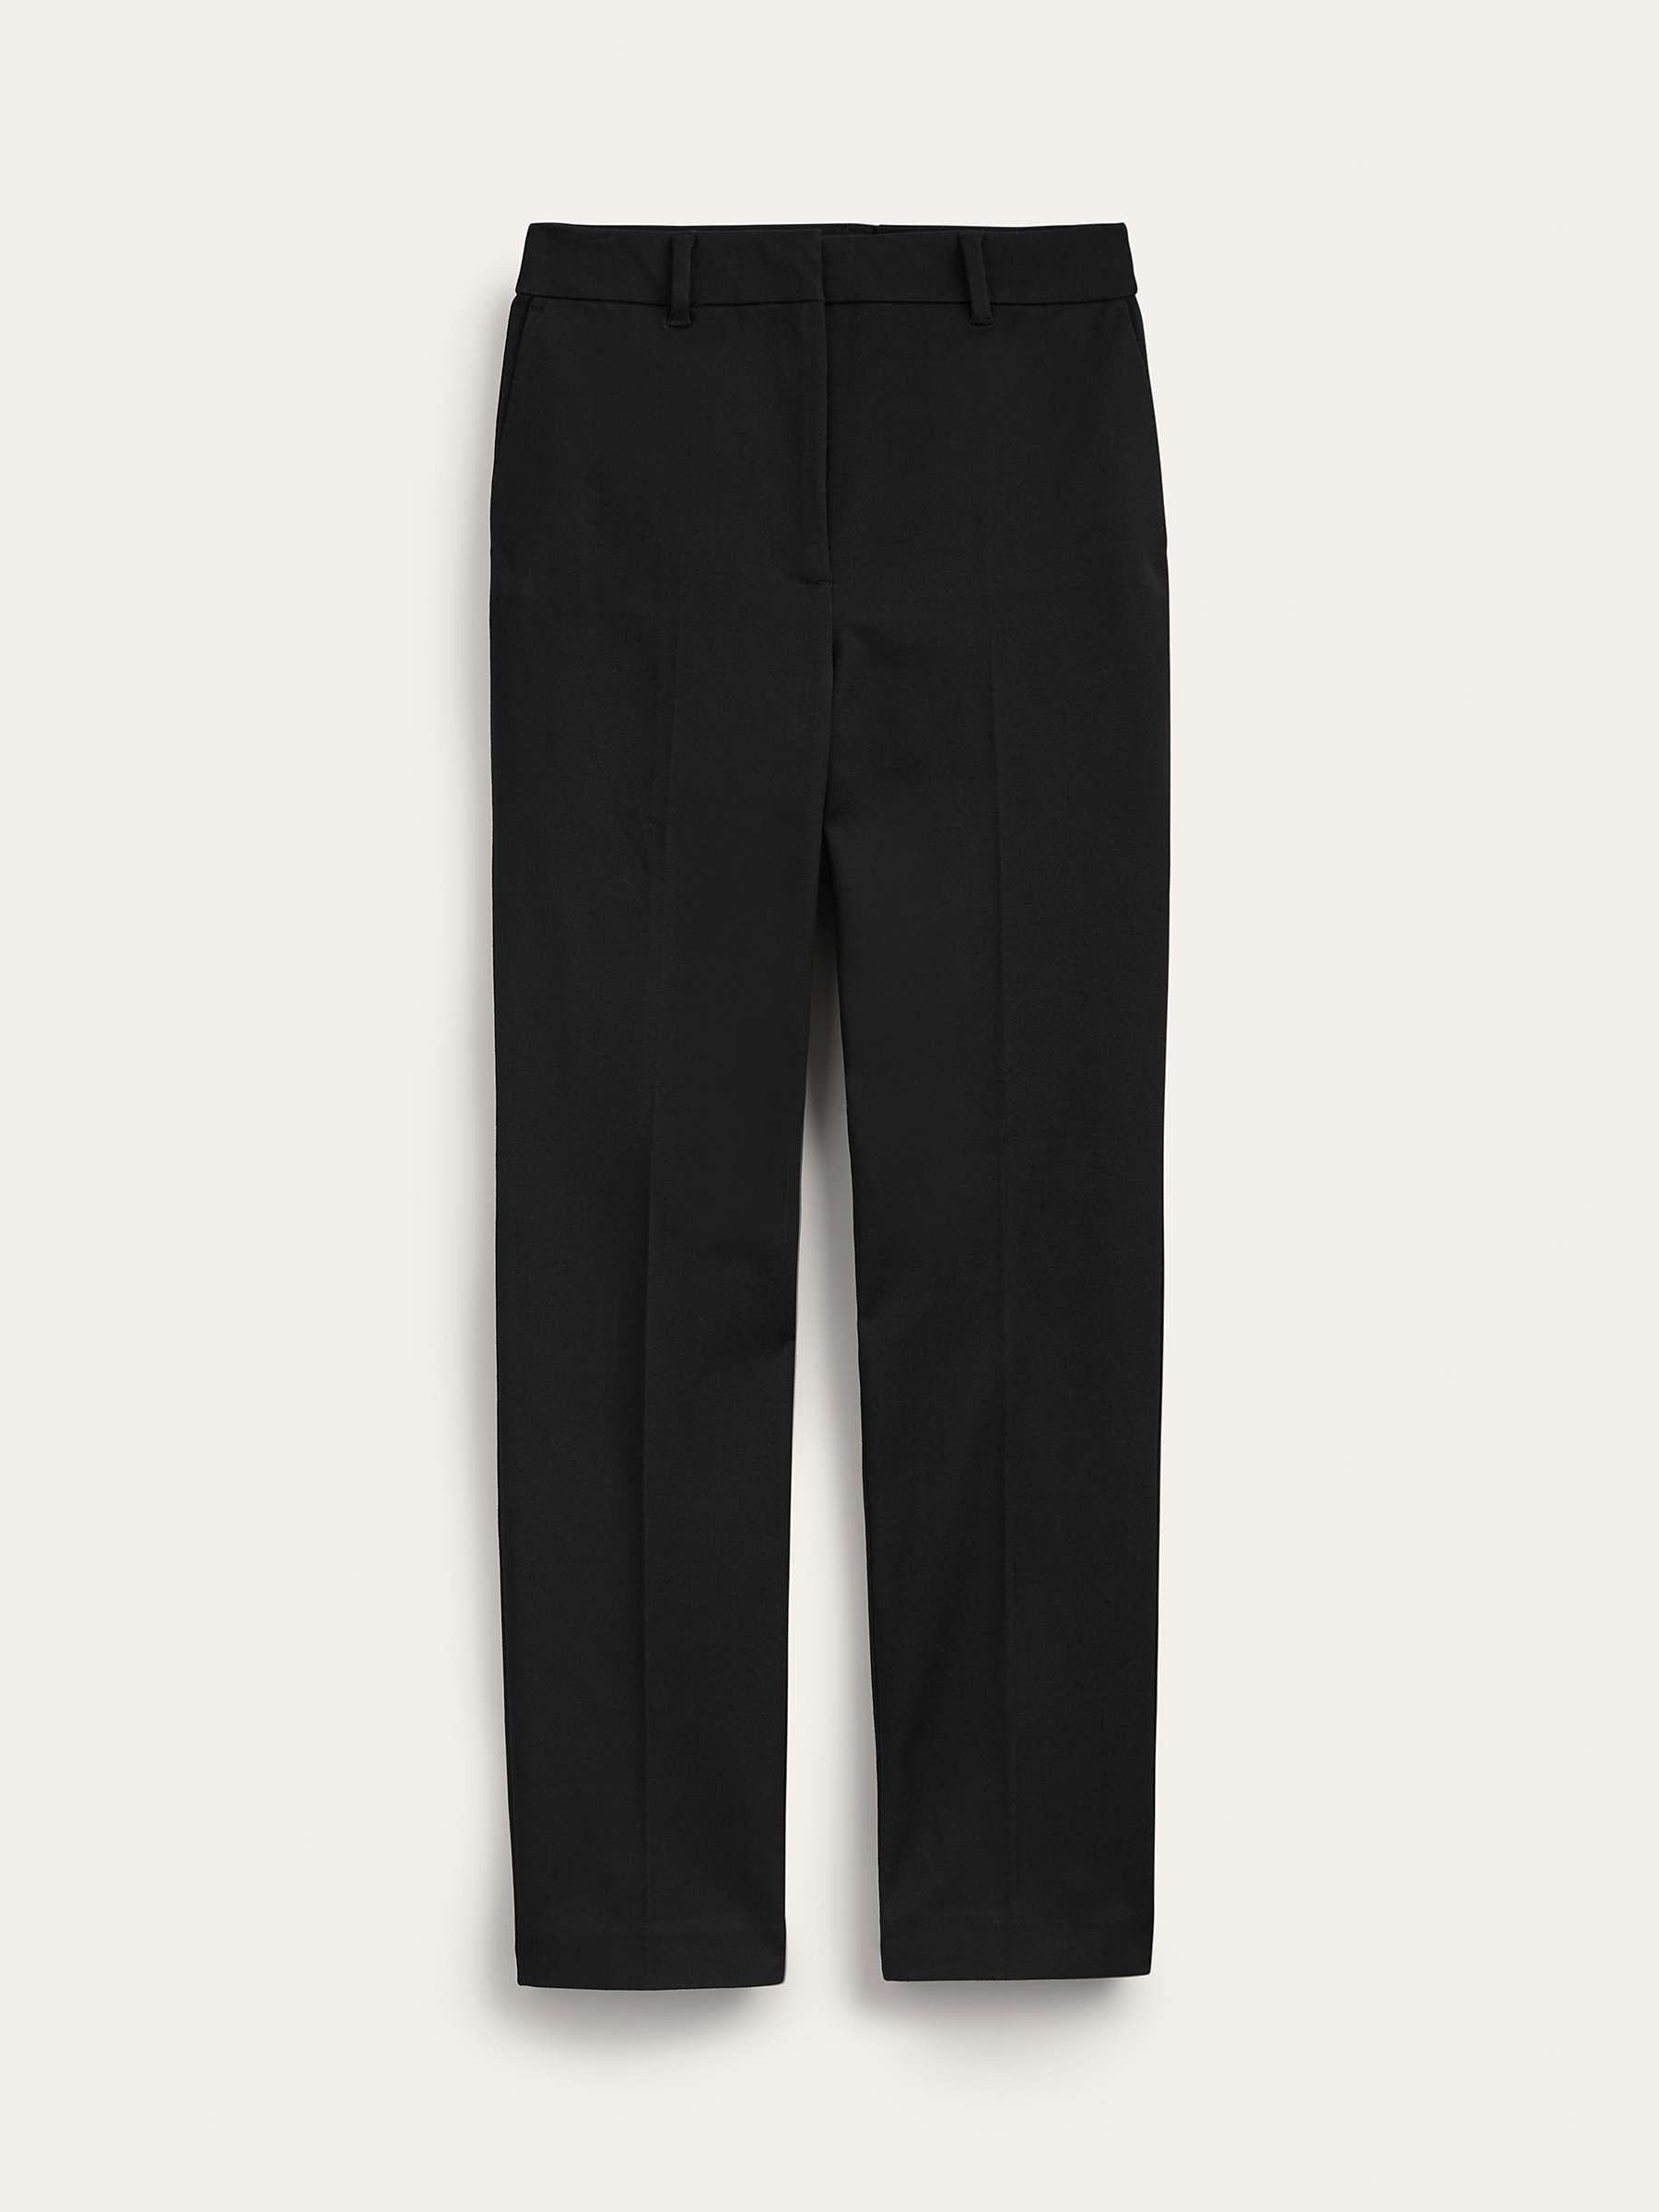 Buy Boden Highgate Bi-Stretch Trousers Online at johnlewis.com